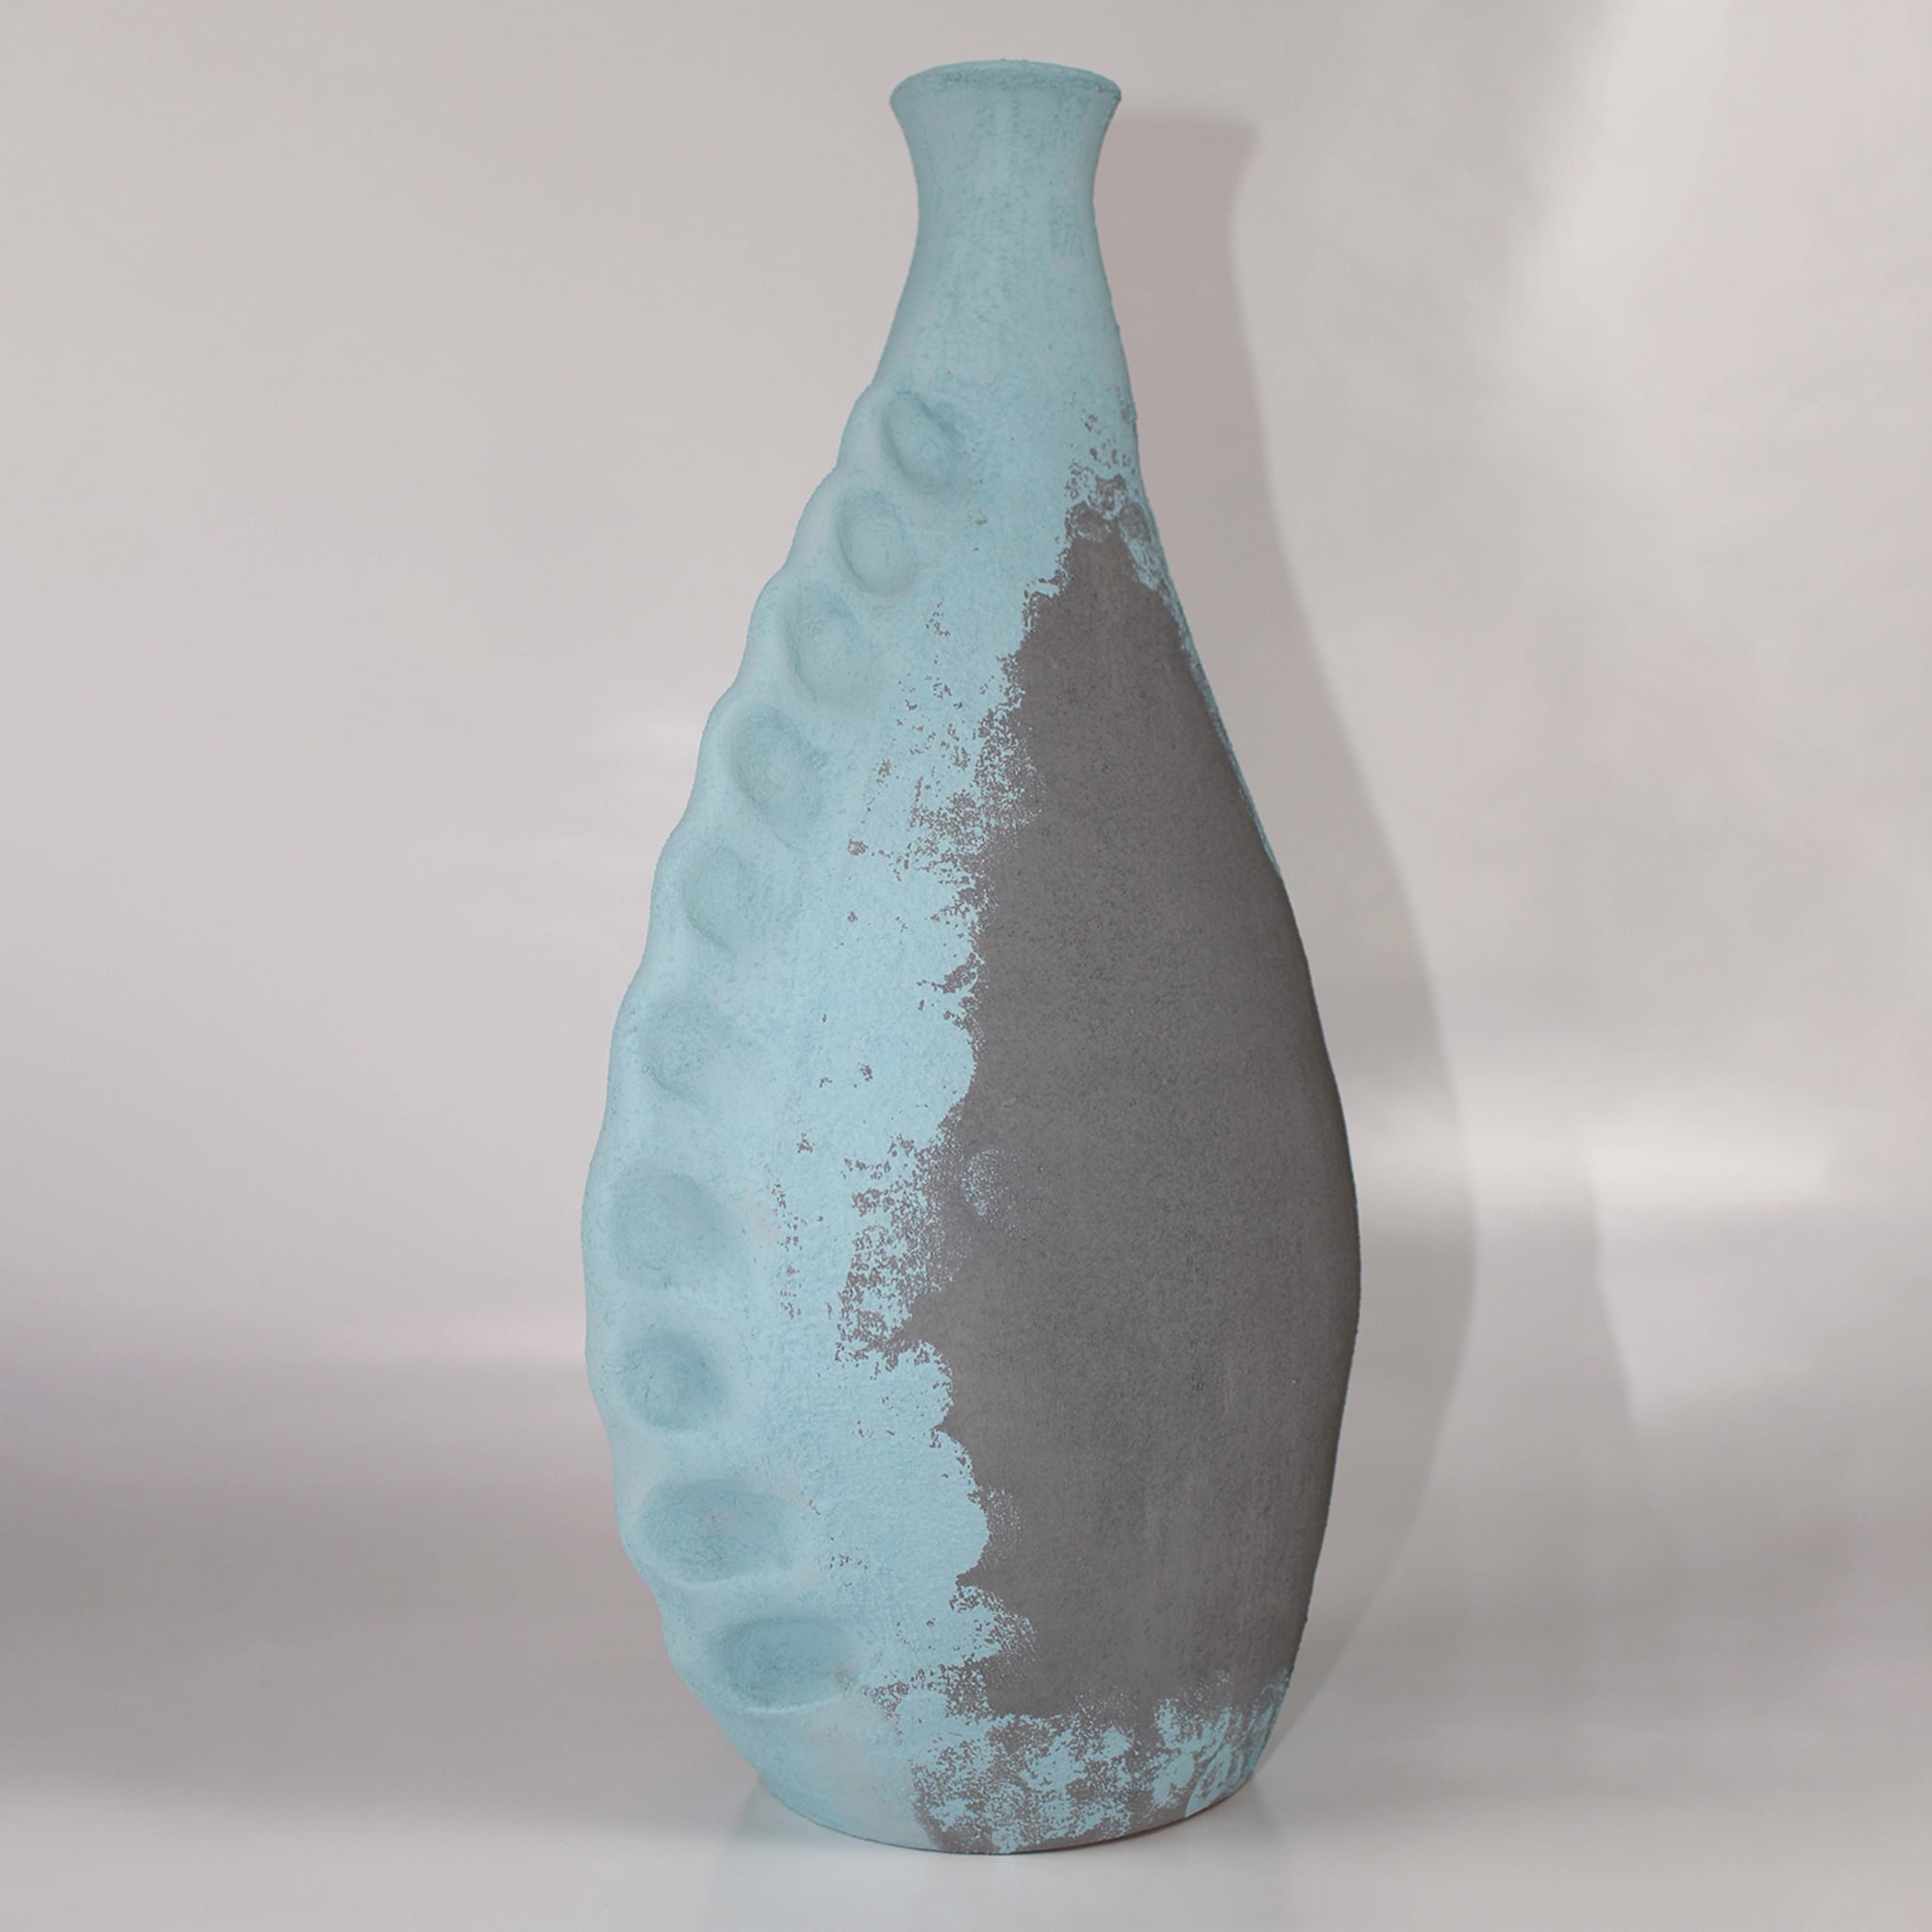 Almond-Shaped Azure & Gray Vase 20 by Mascia Meccani - Alternative view 1